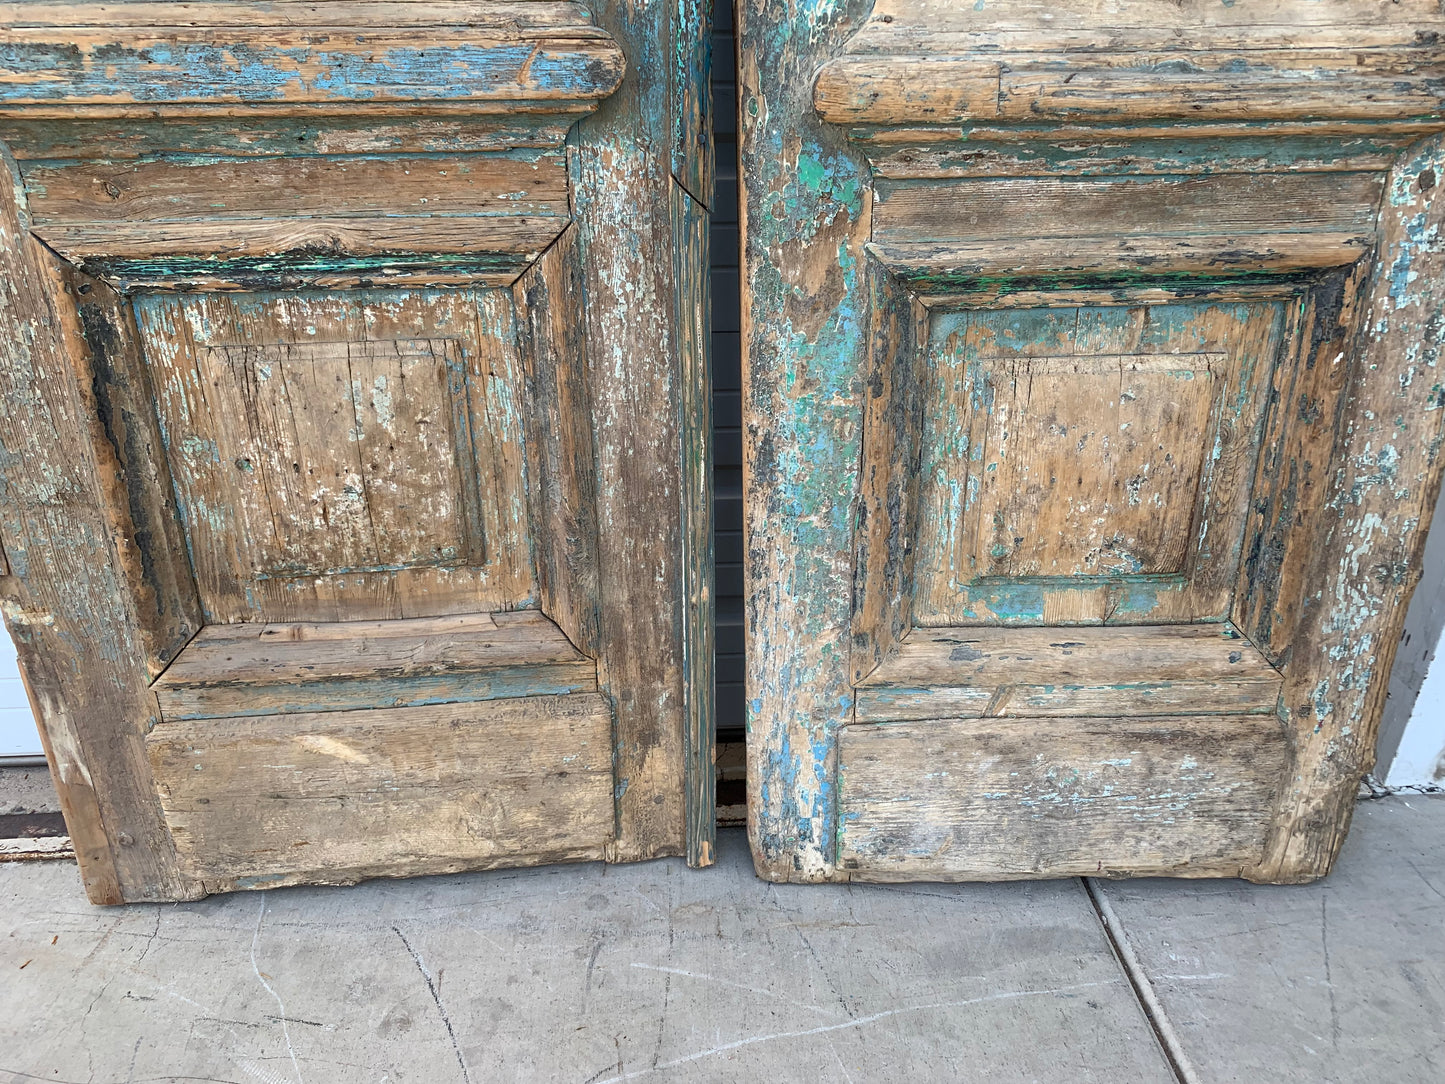 Pair of Ornate Antique Wood Carved Doors